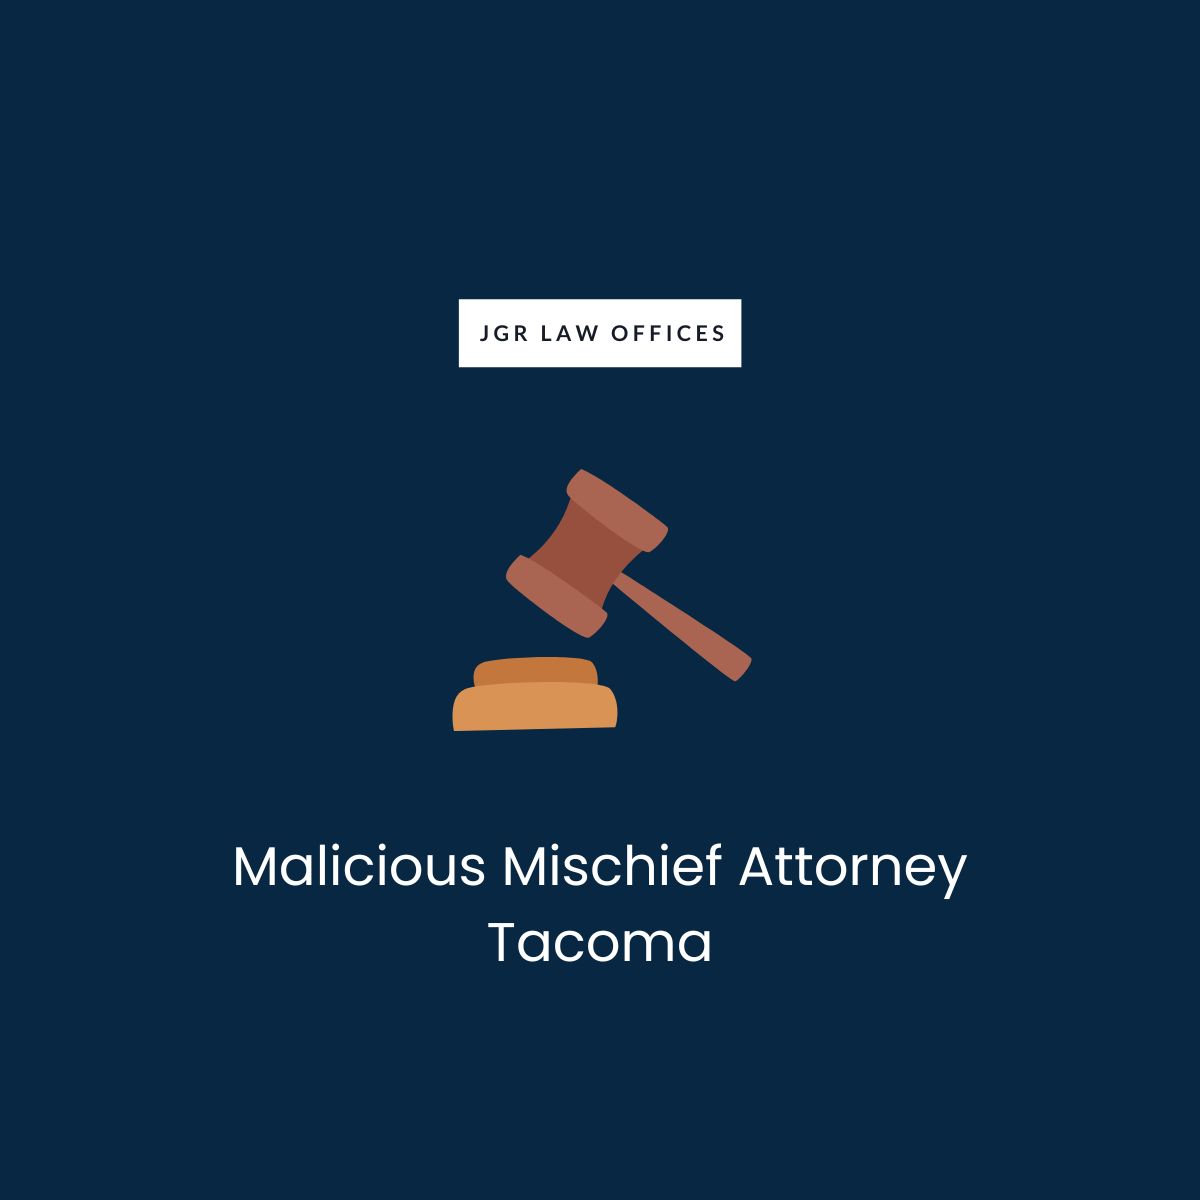 Malicious Mischief Attorney Tacoma